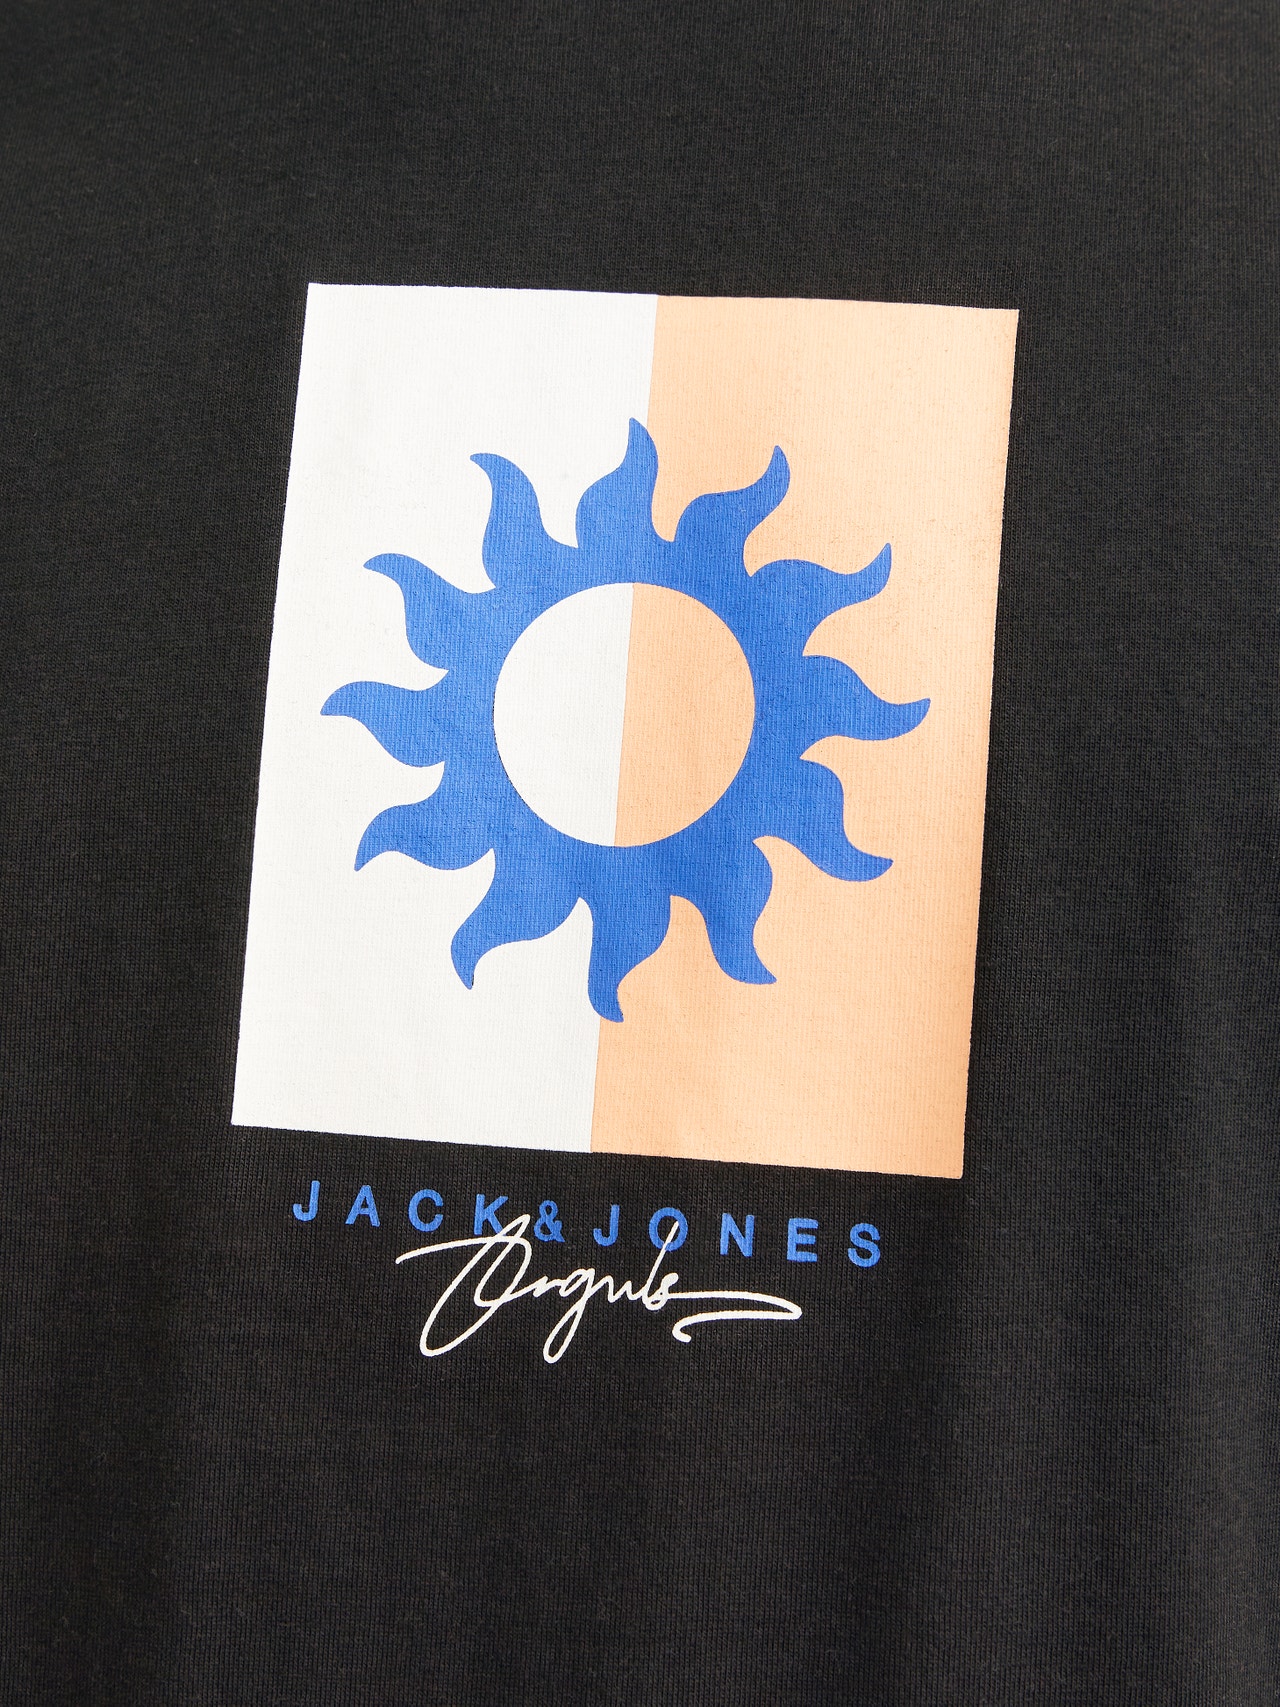 Jack & Jones Printet Crew neck T-shirt -Black - 12255569